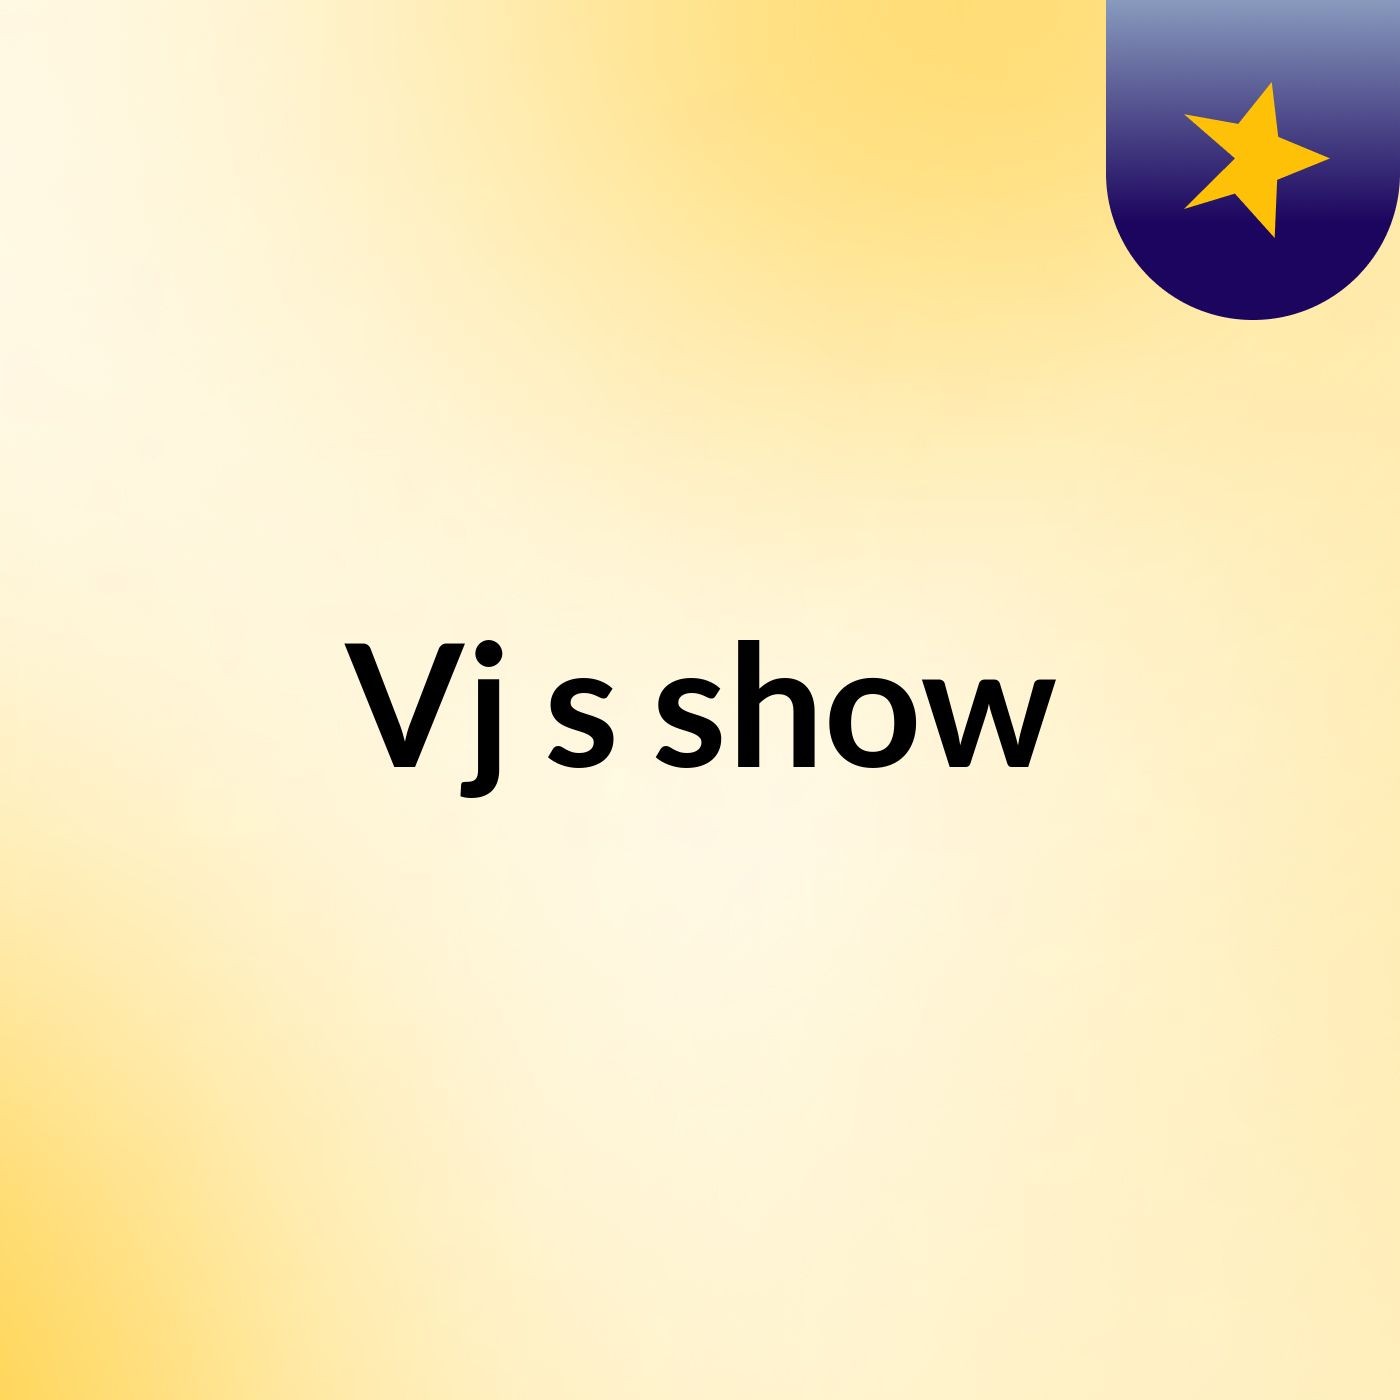 Vj's show